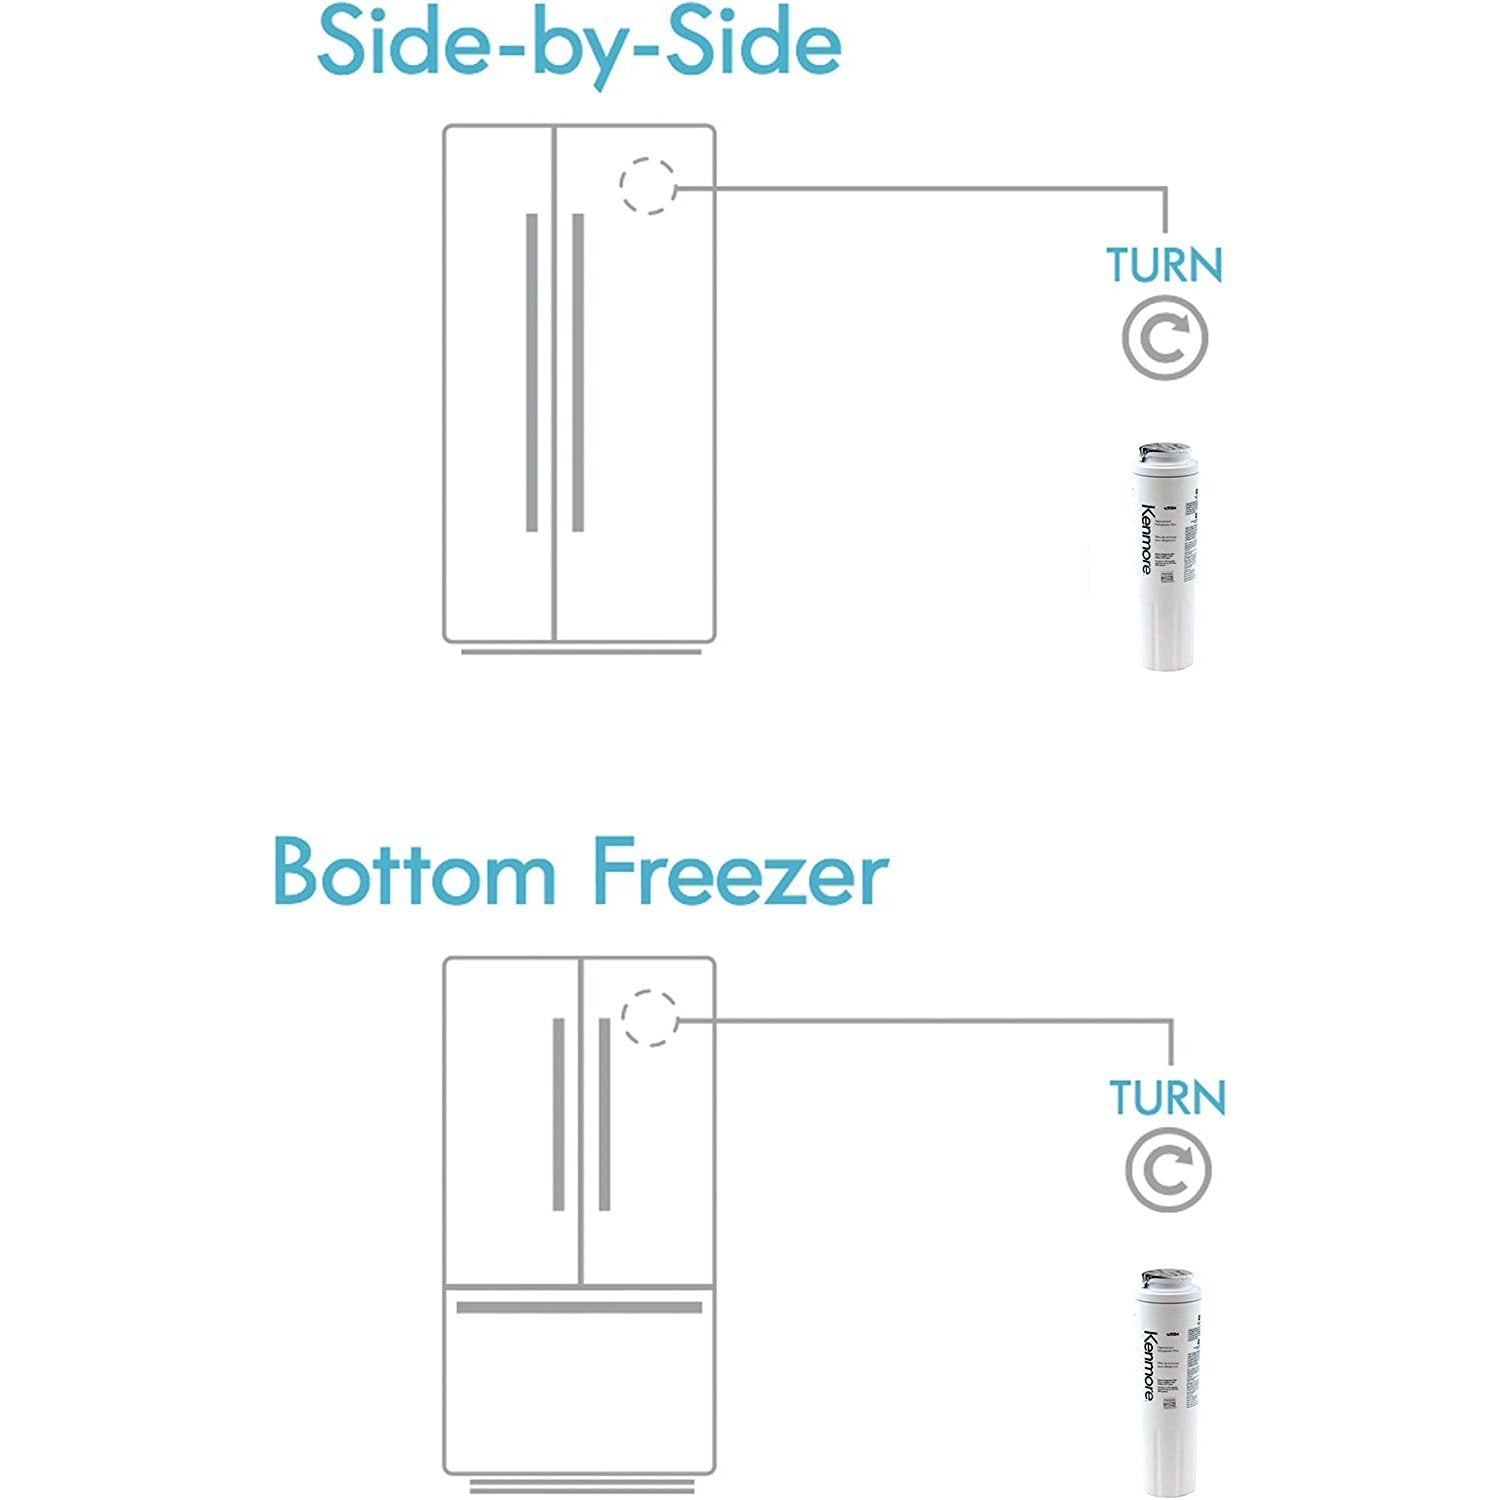 Kenmore 9084 Replacement Refrigerator Water Filter